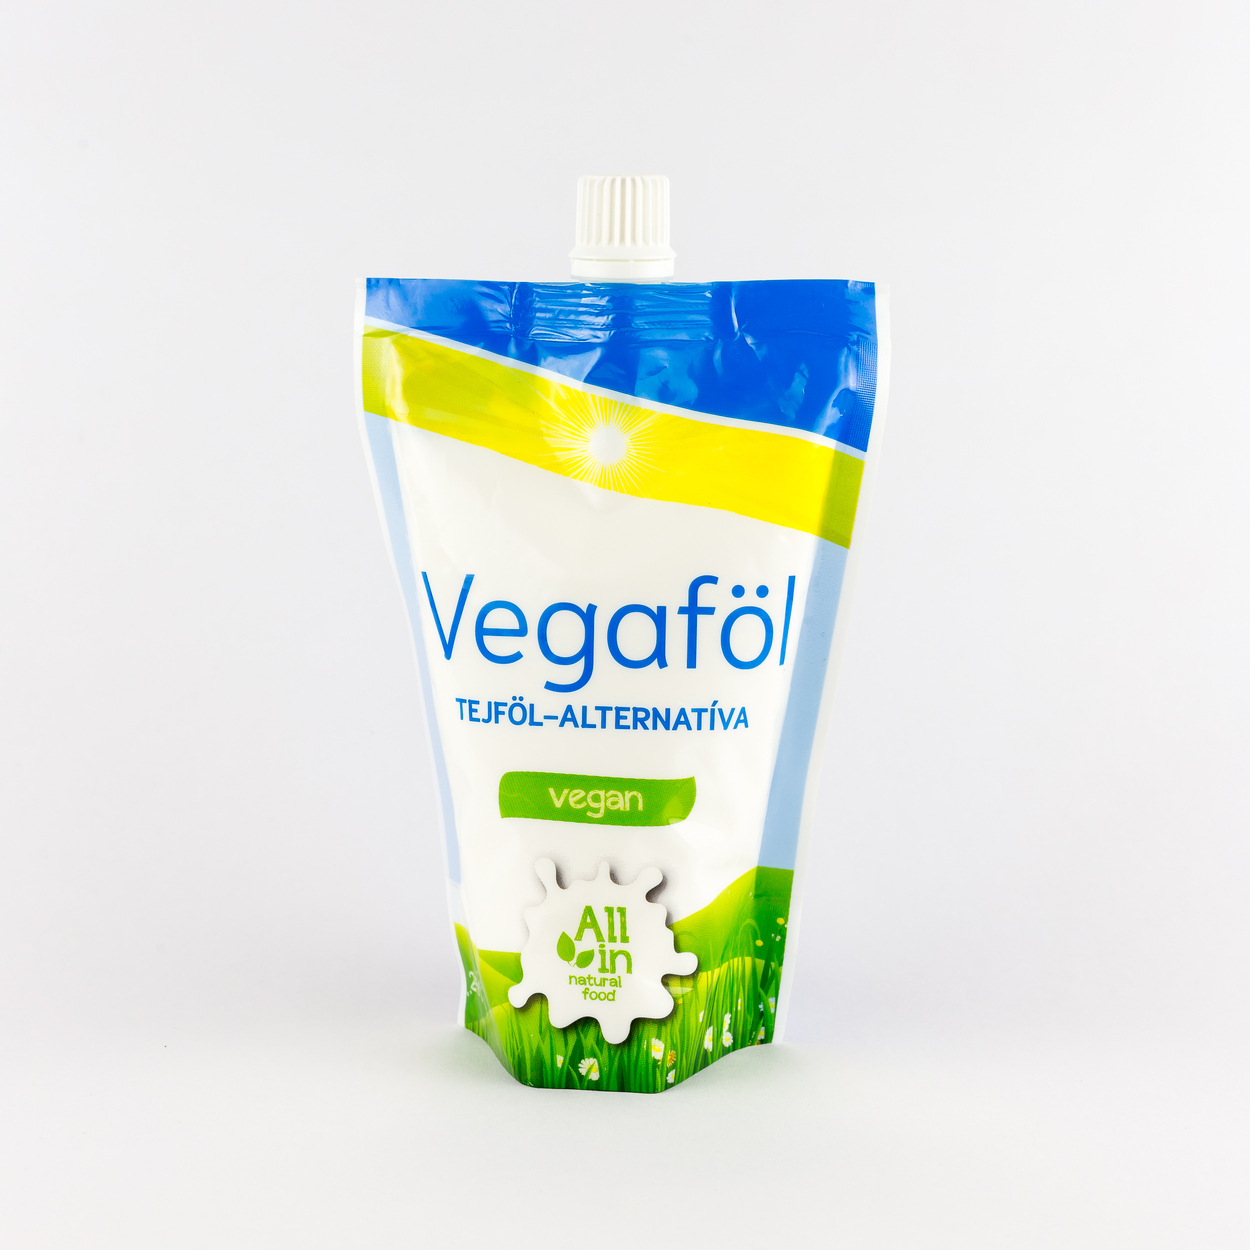 Vegaföl - ALL IN natural food